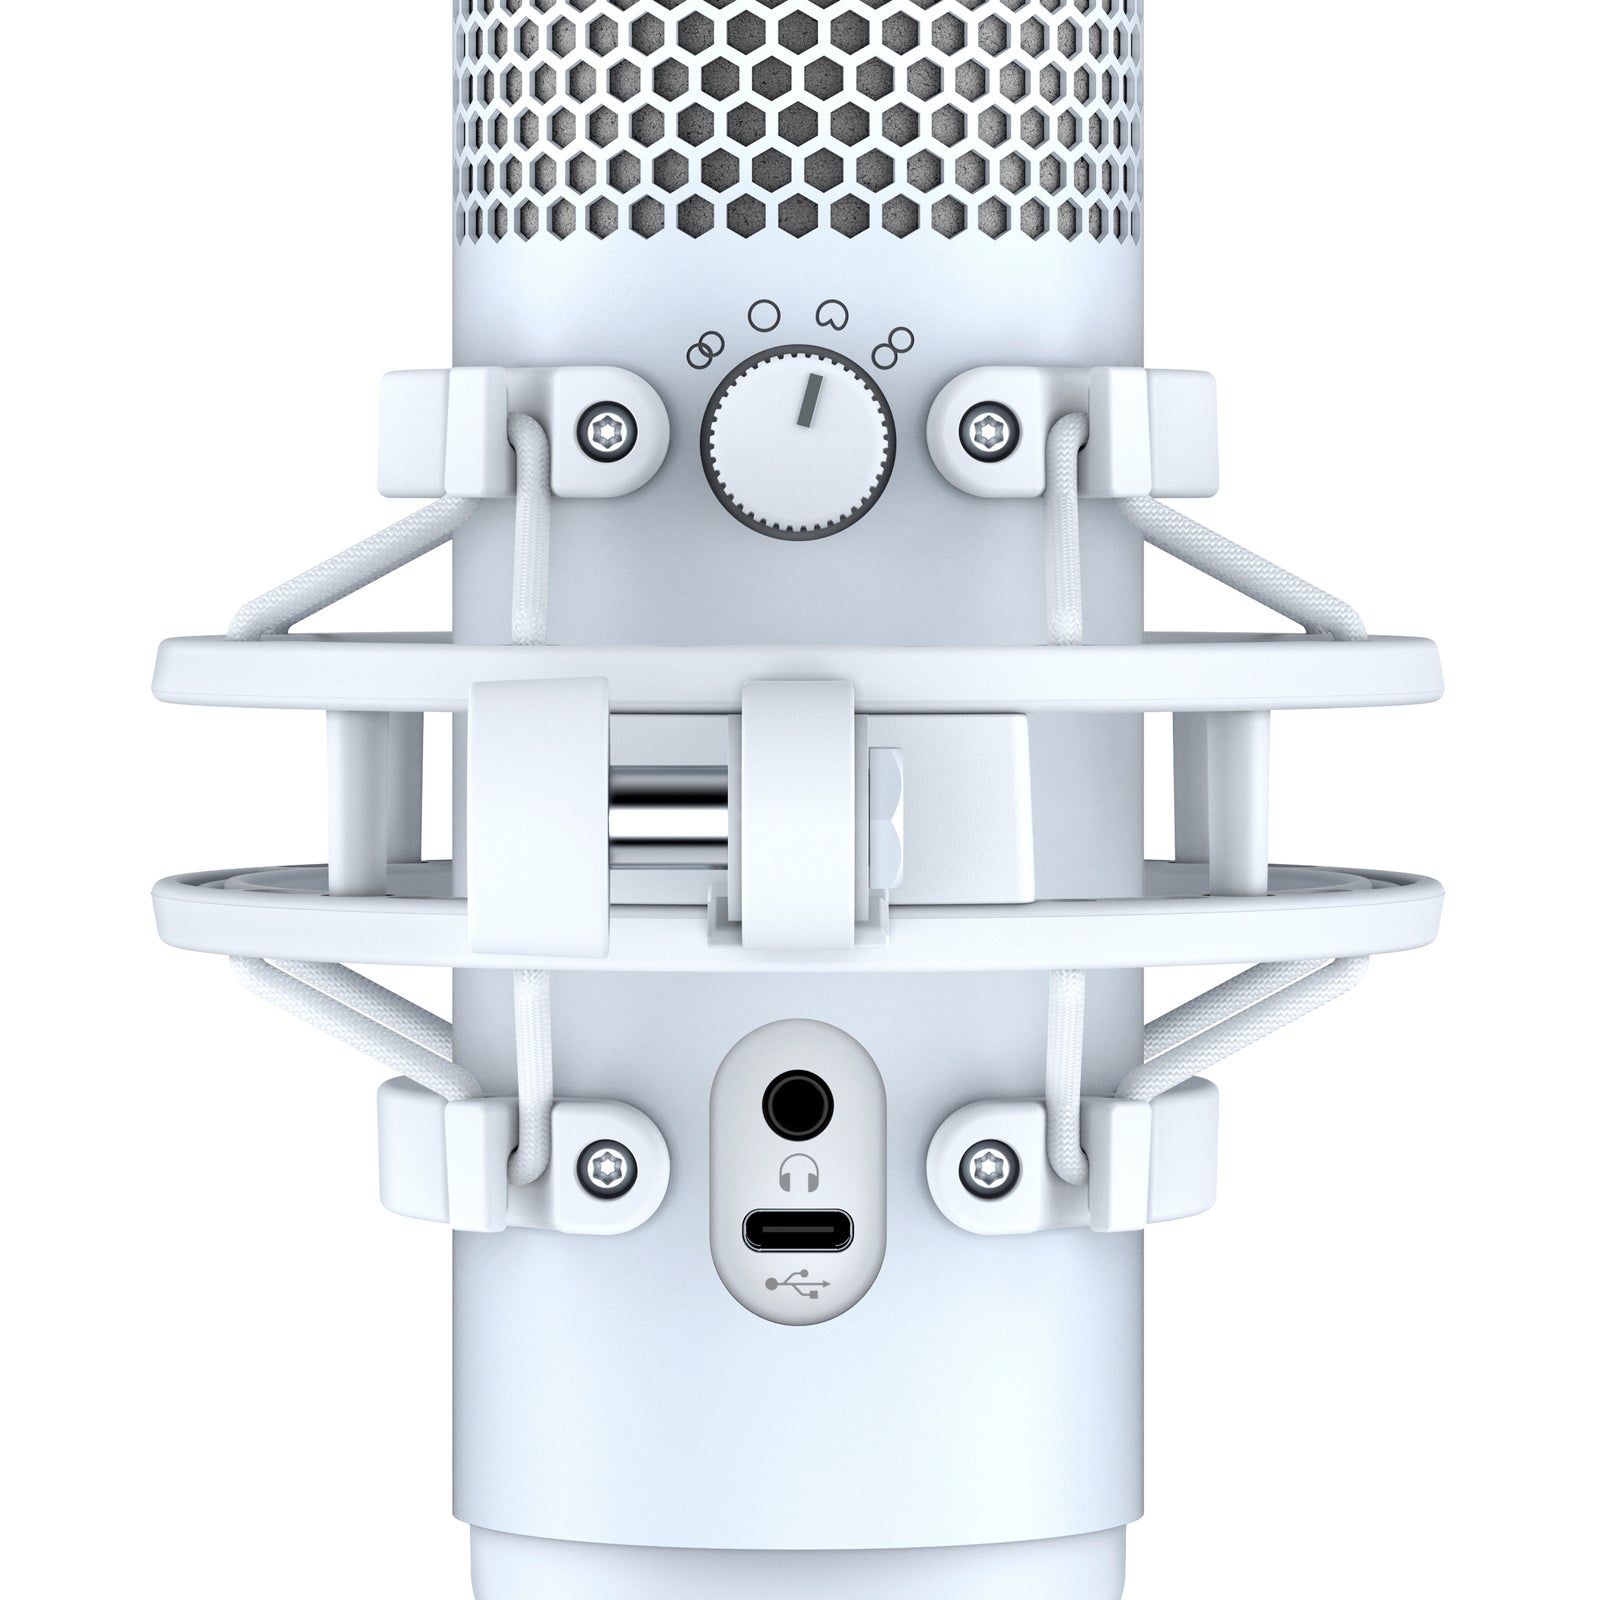 HyperX QuadCast S - USB Microphone